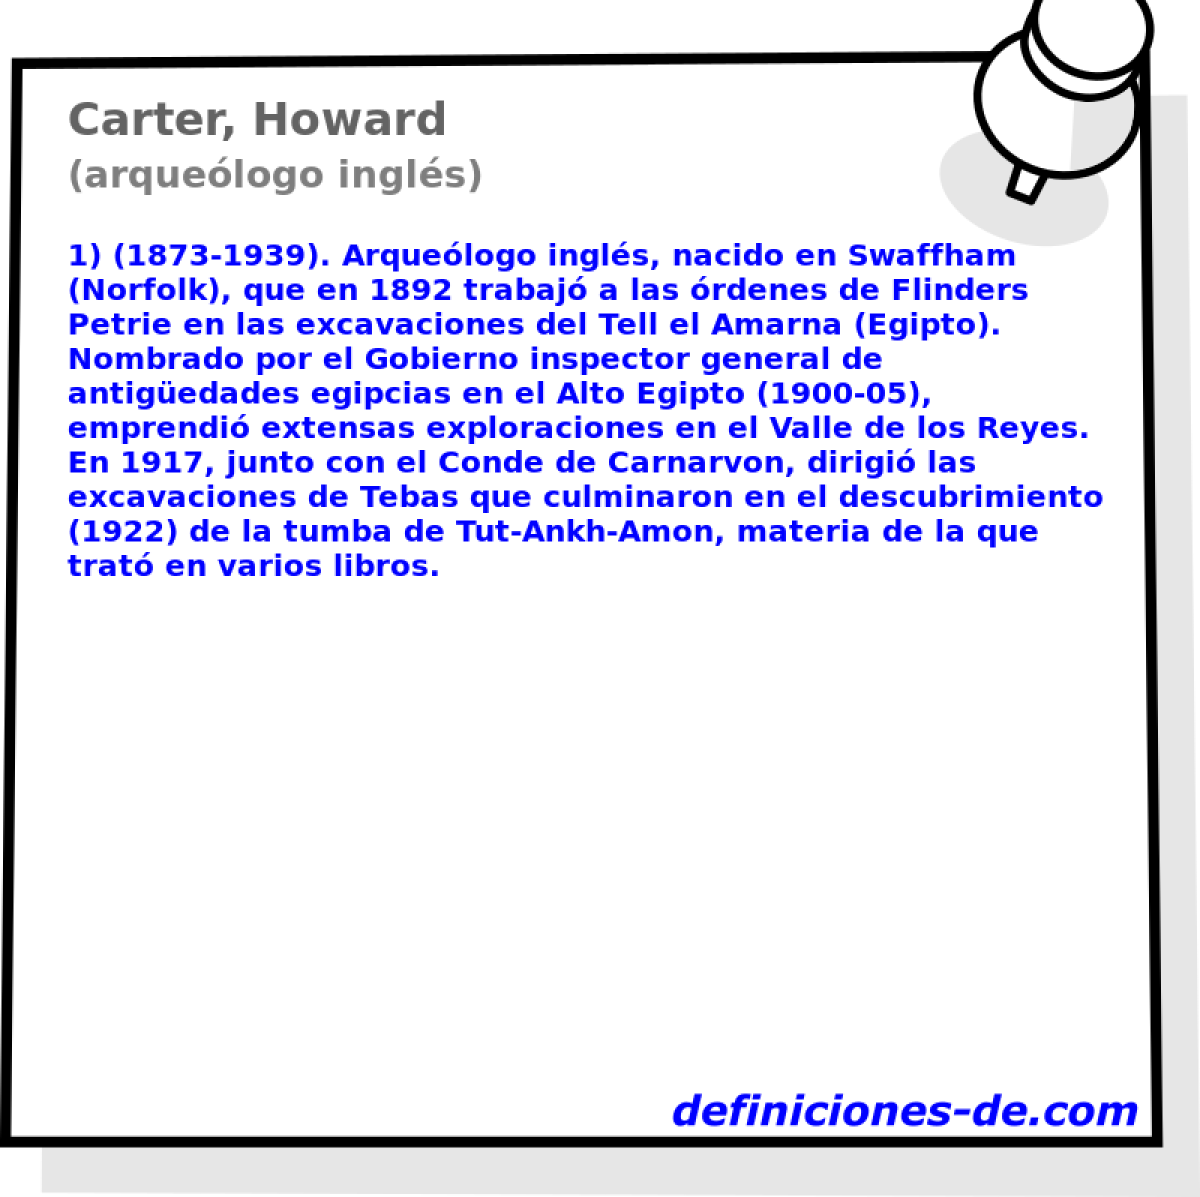 Carter, Howard (arquelogo ingls)